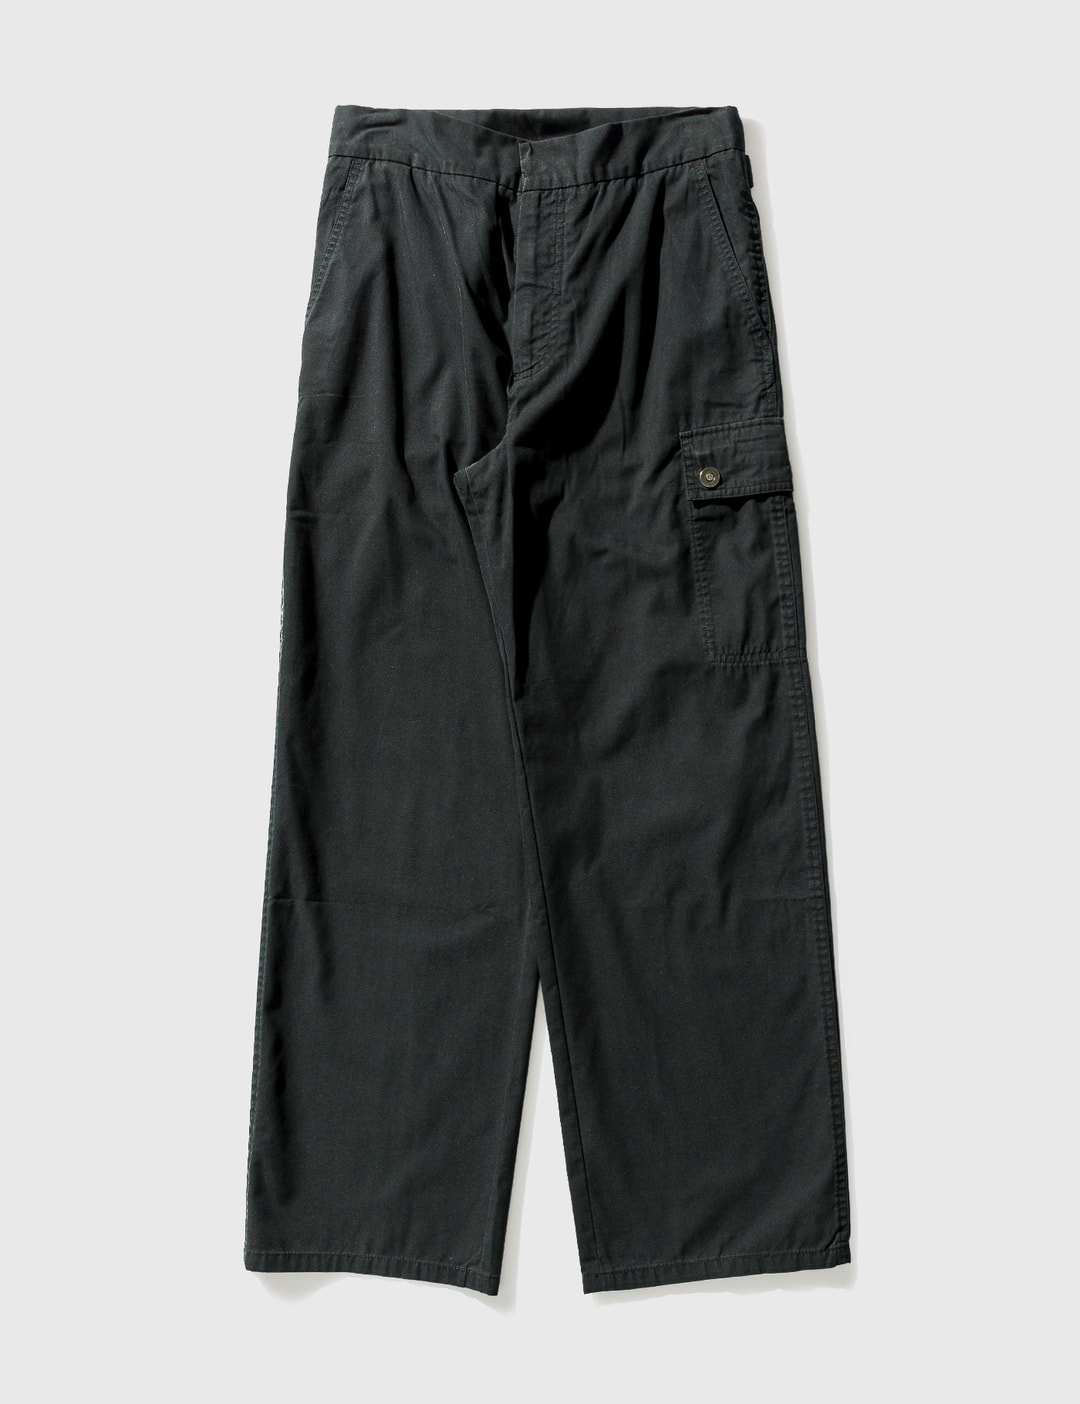 Louis Vuitton Mens Cargo Pants, Grey, 42